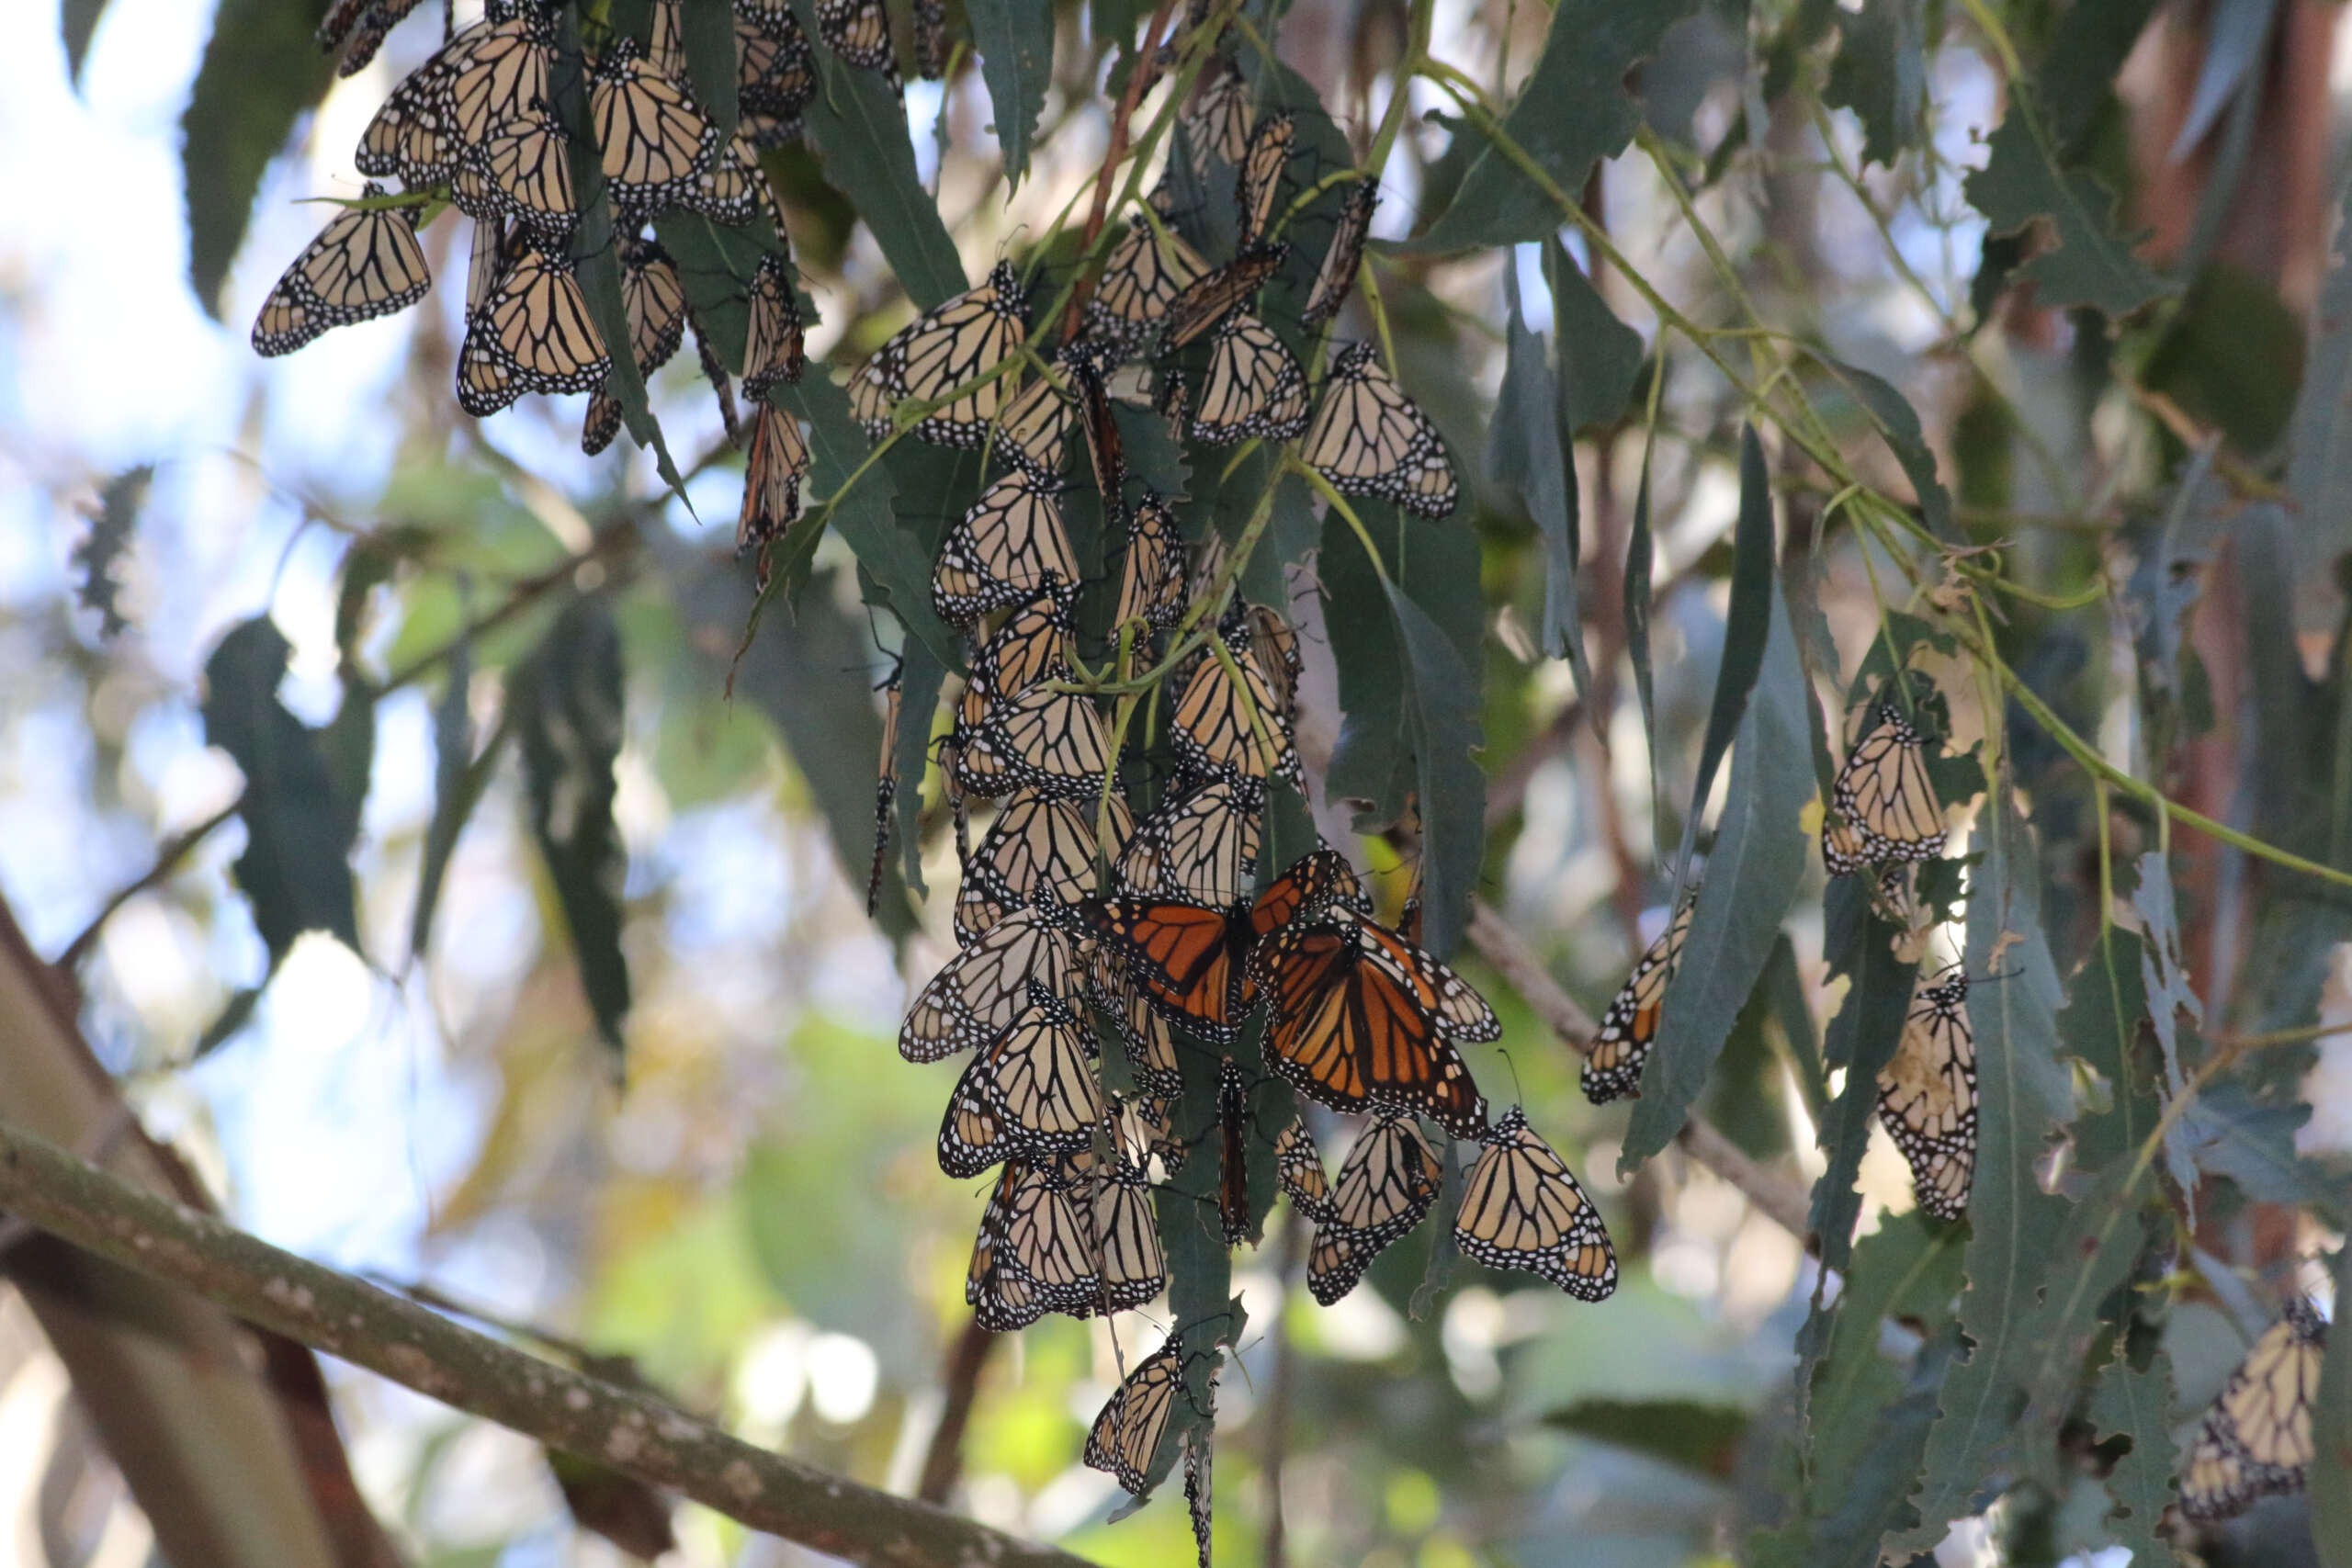 Overwintering monarchs in Goleta, California. Photo Credit: Joanna Gilkeson/USFWS